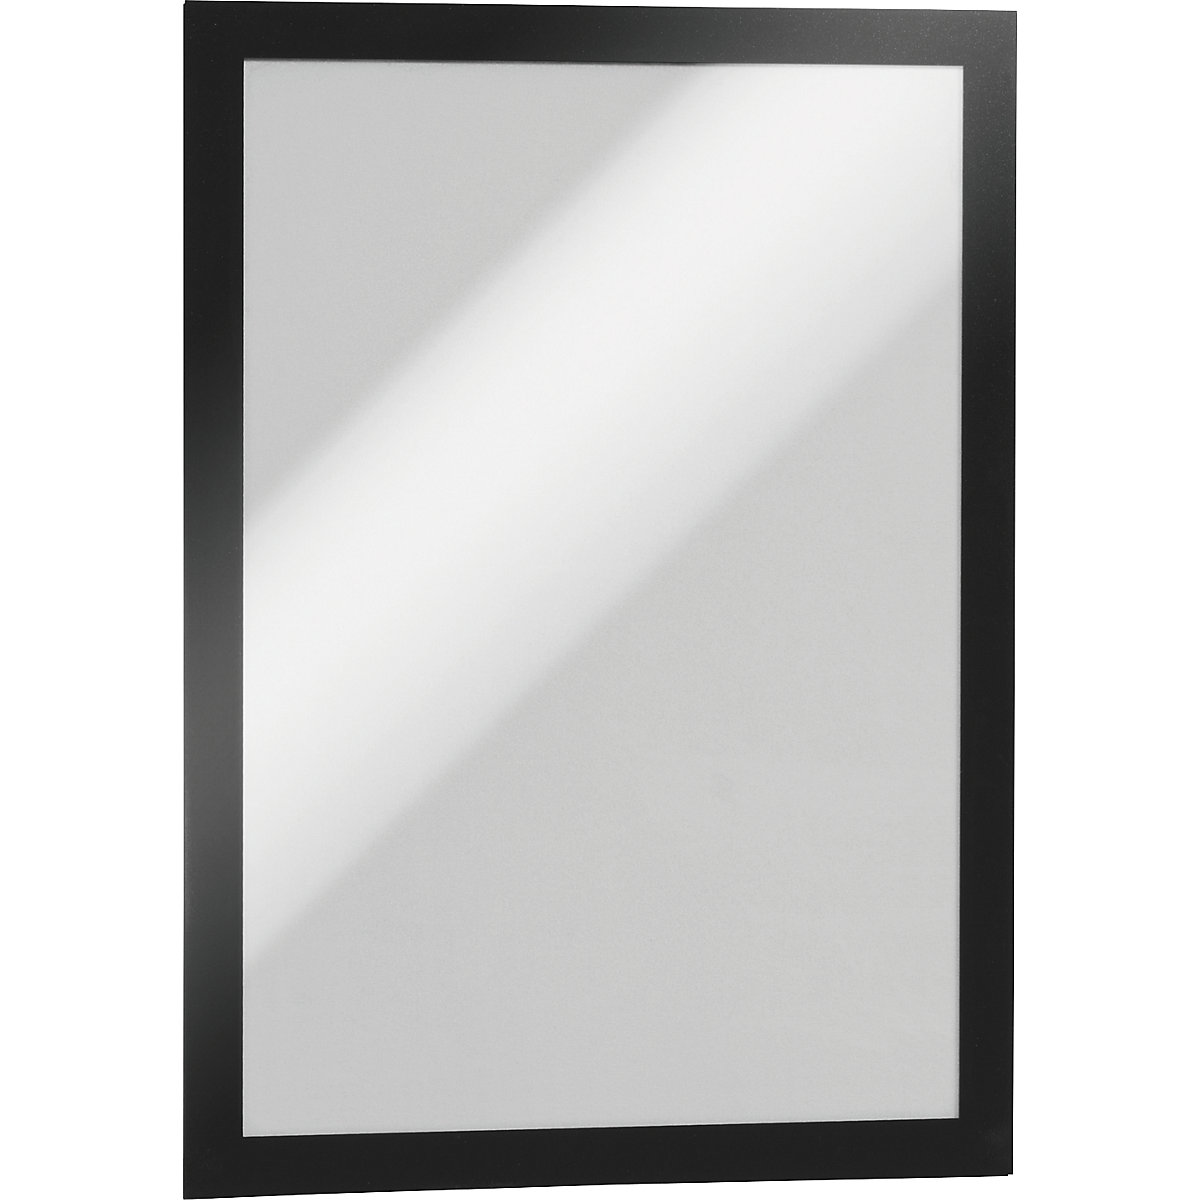 DURAFRAME® display frame – DURABLE